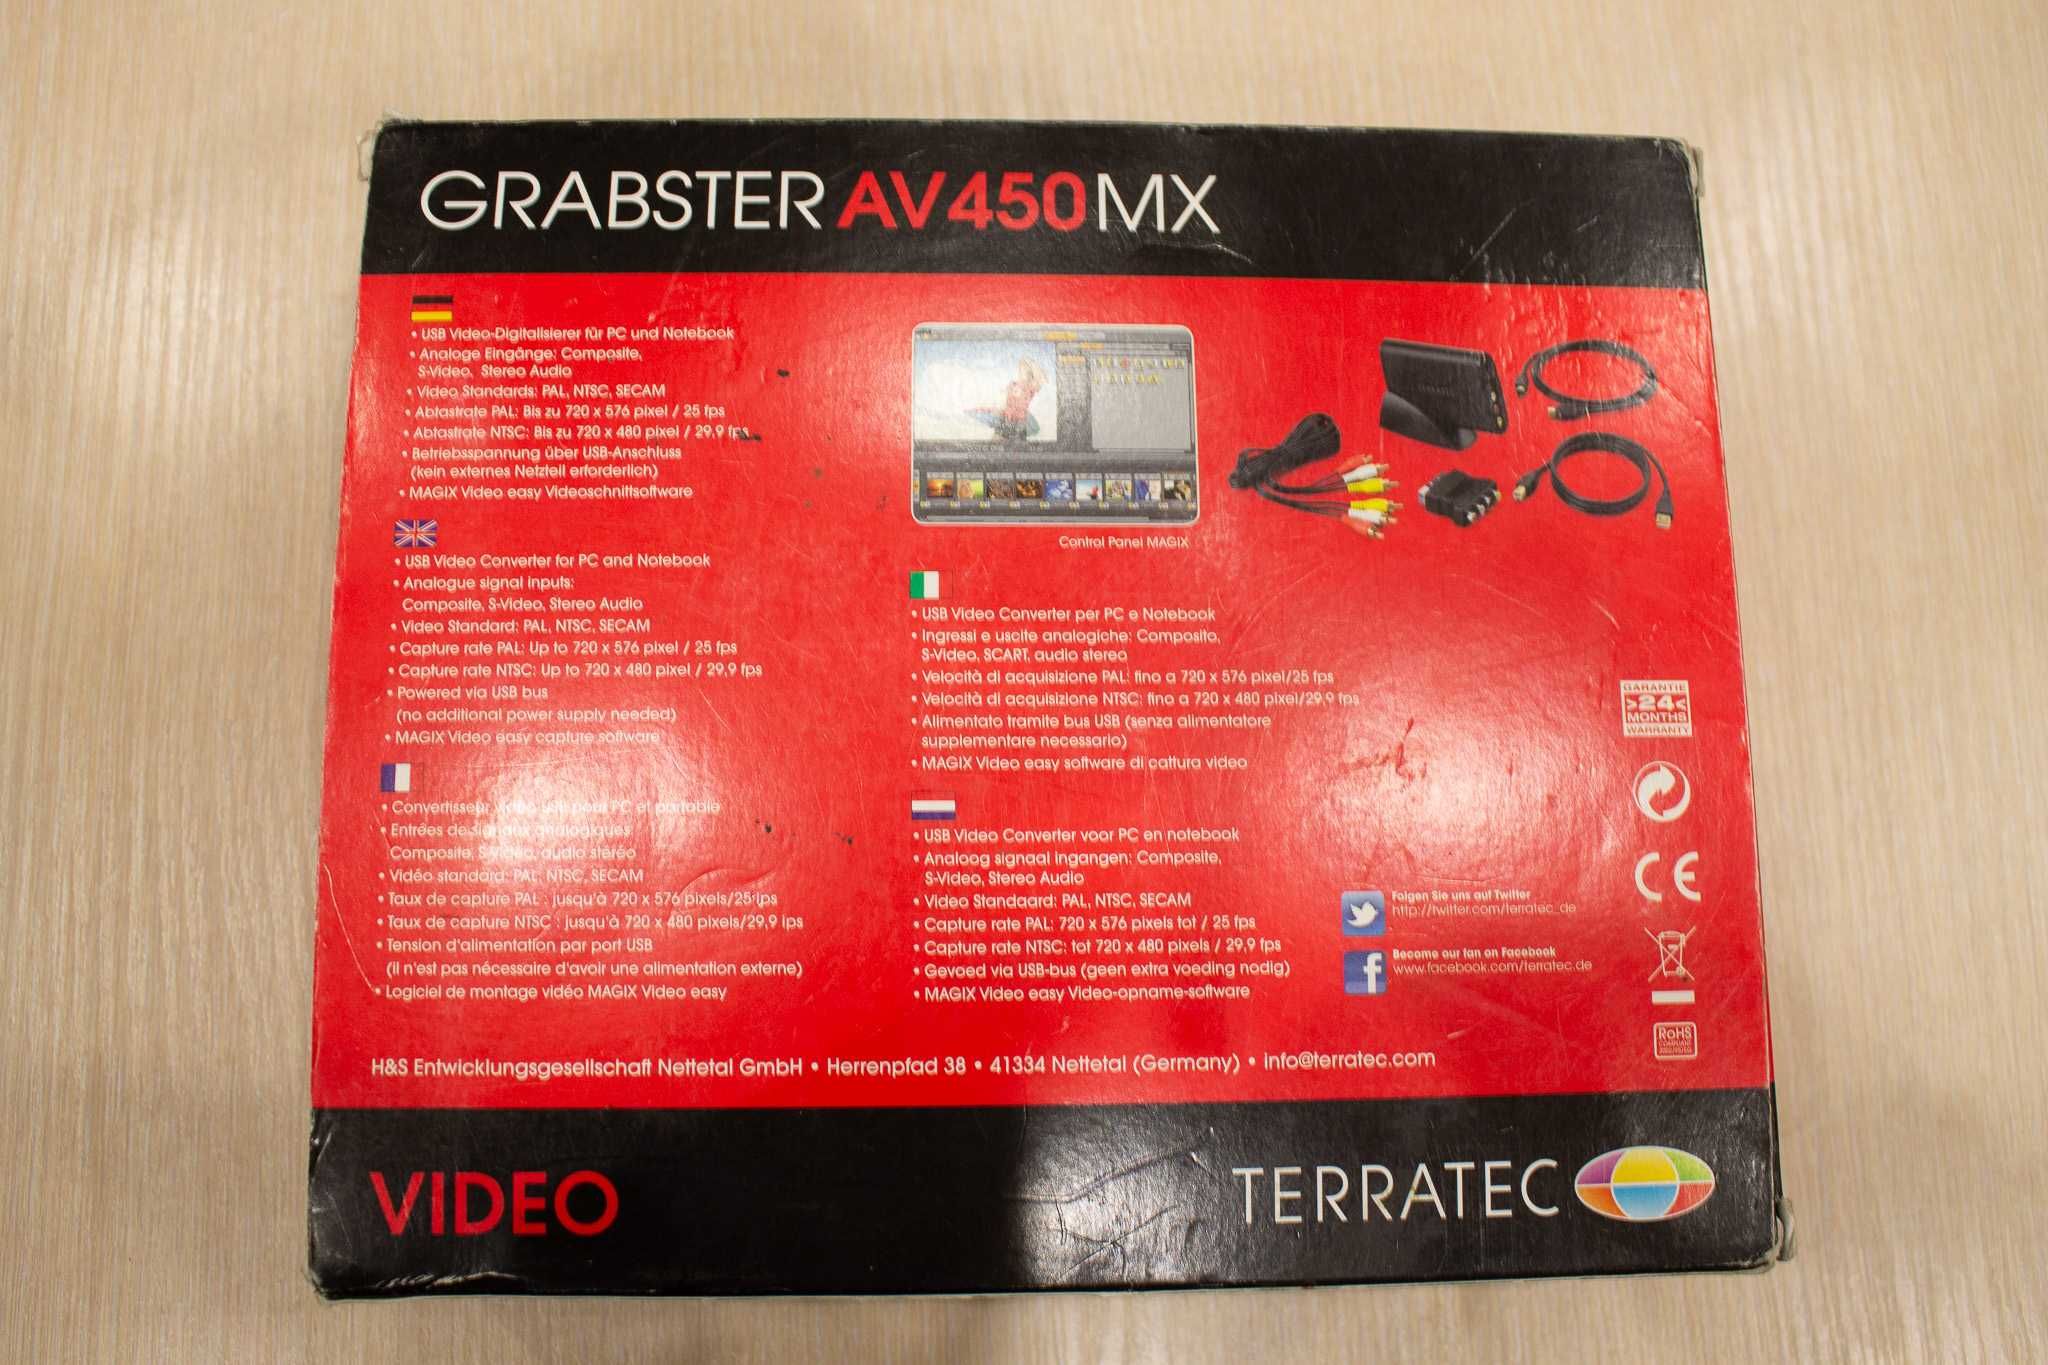 Zgrywanie z VHS przegrywanie DVD CD Terratec Grabster AV 450